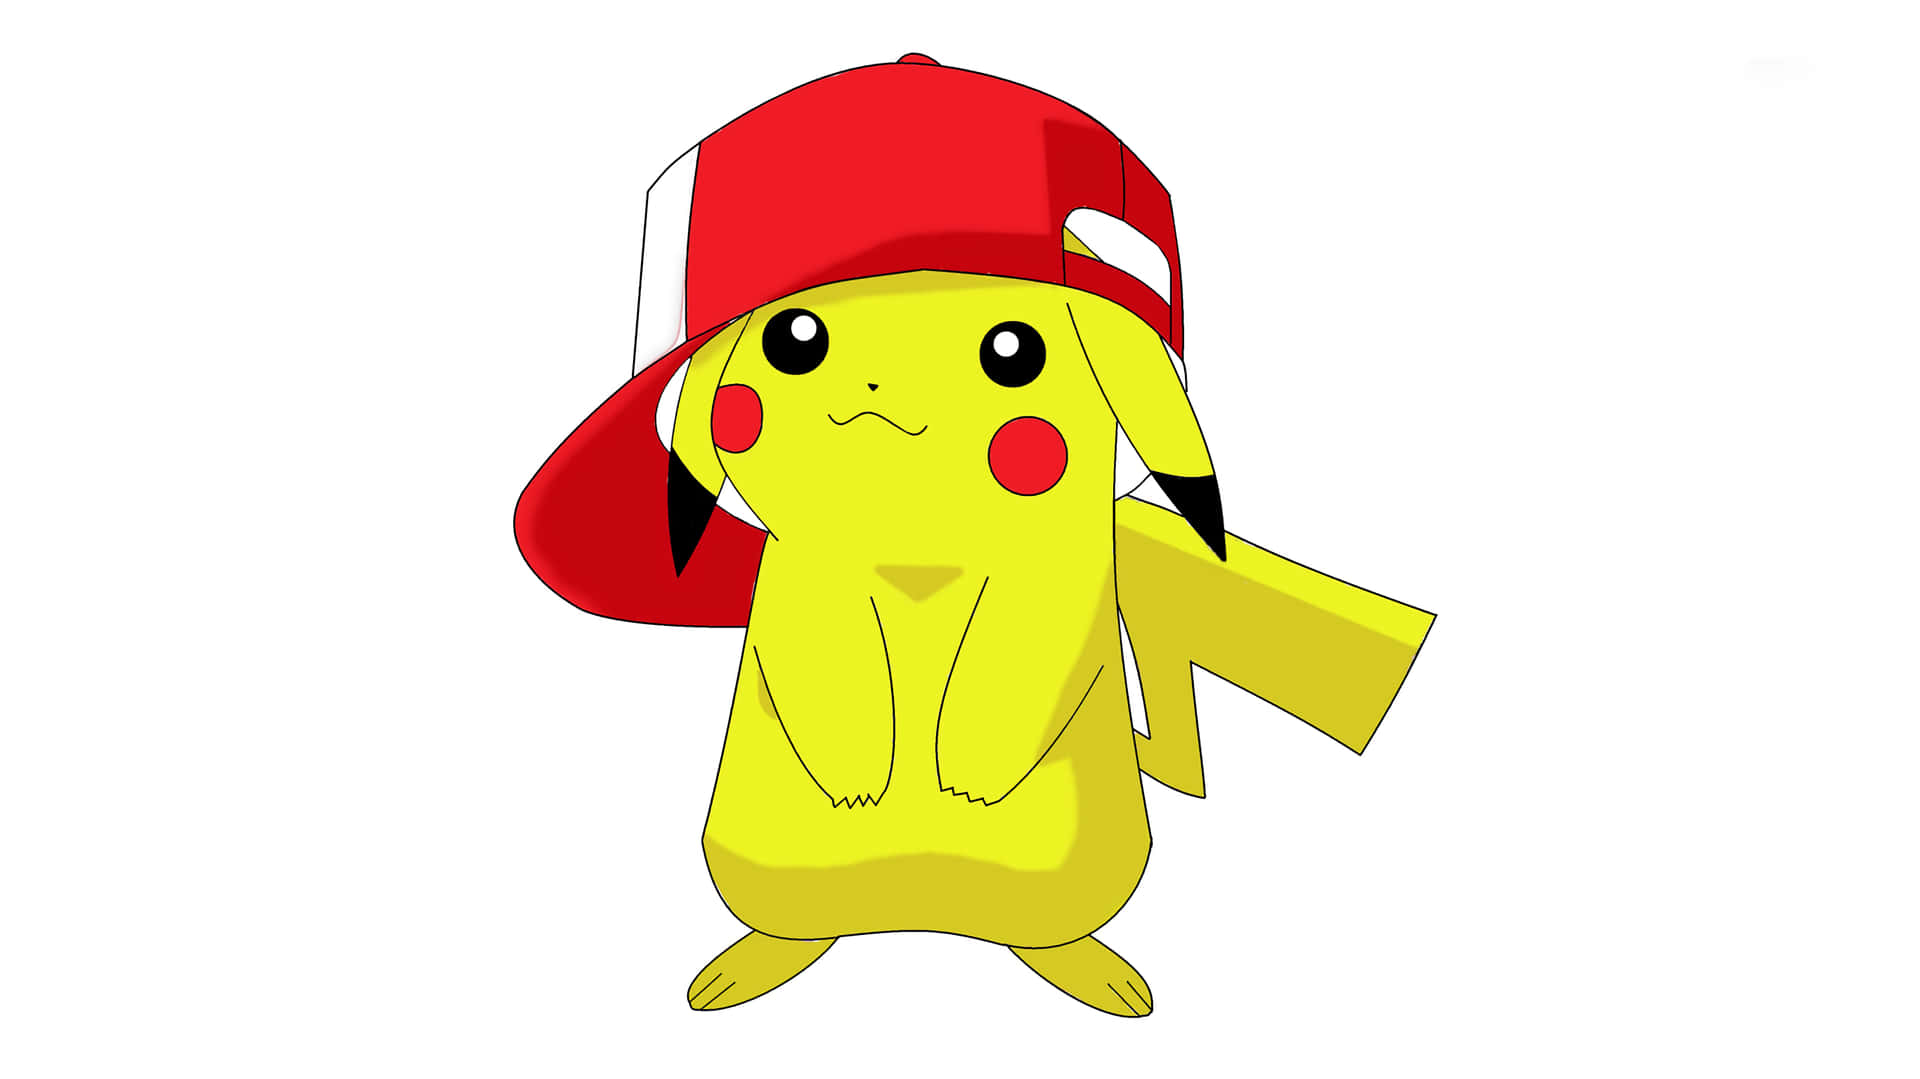 Pokémonprofilbild Pikachu Wallpaper